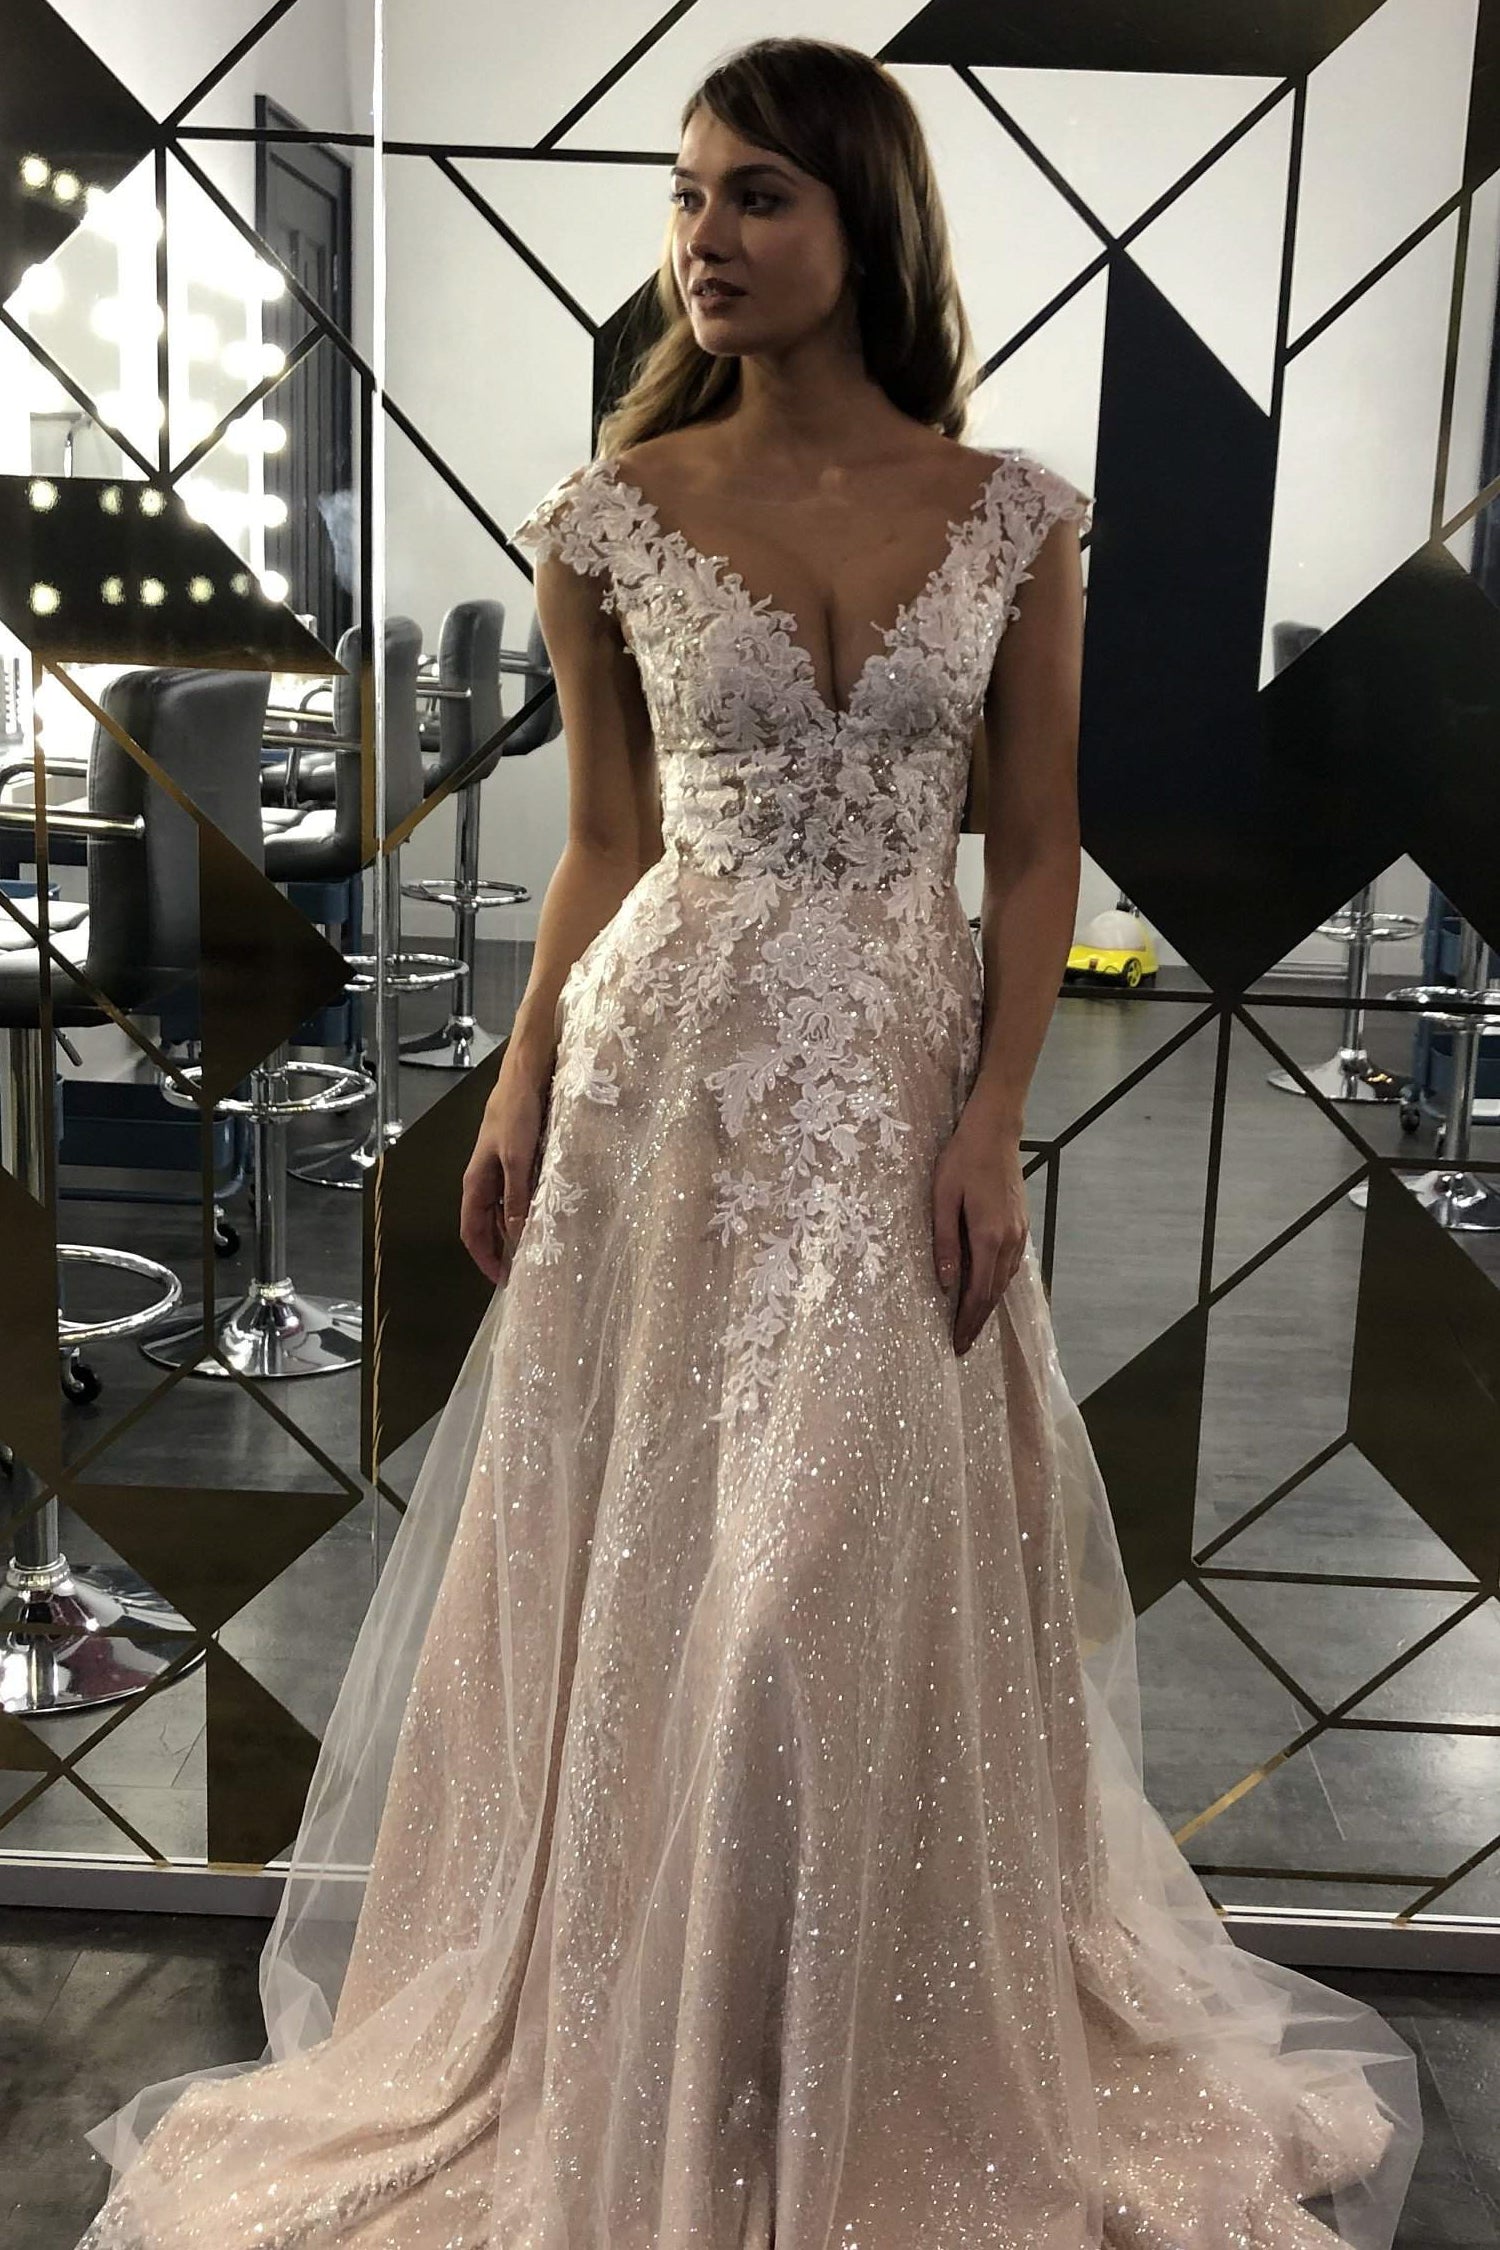 The Best Sparkling Lace Wedding Dress. Sparkly Flowy Wedding Dress